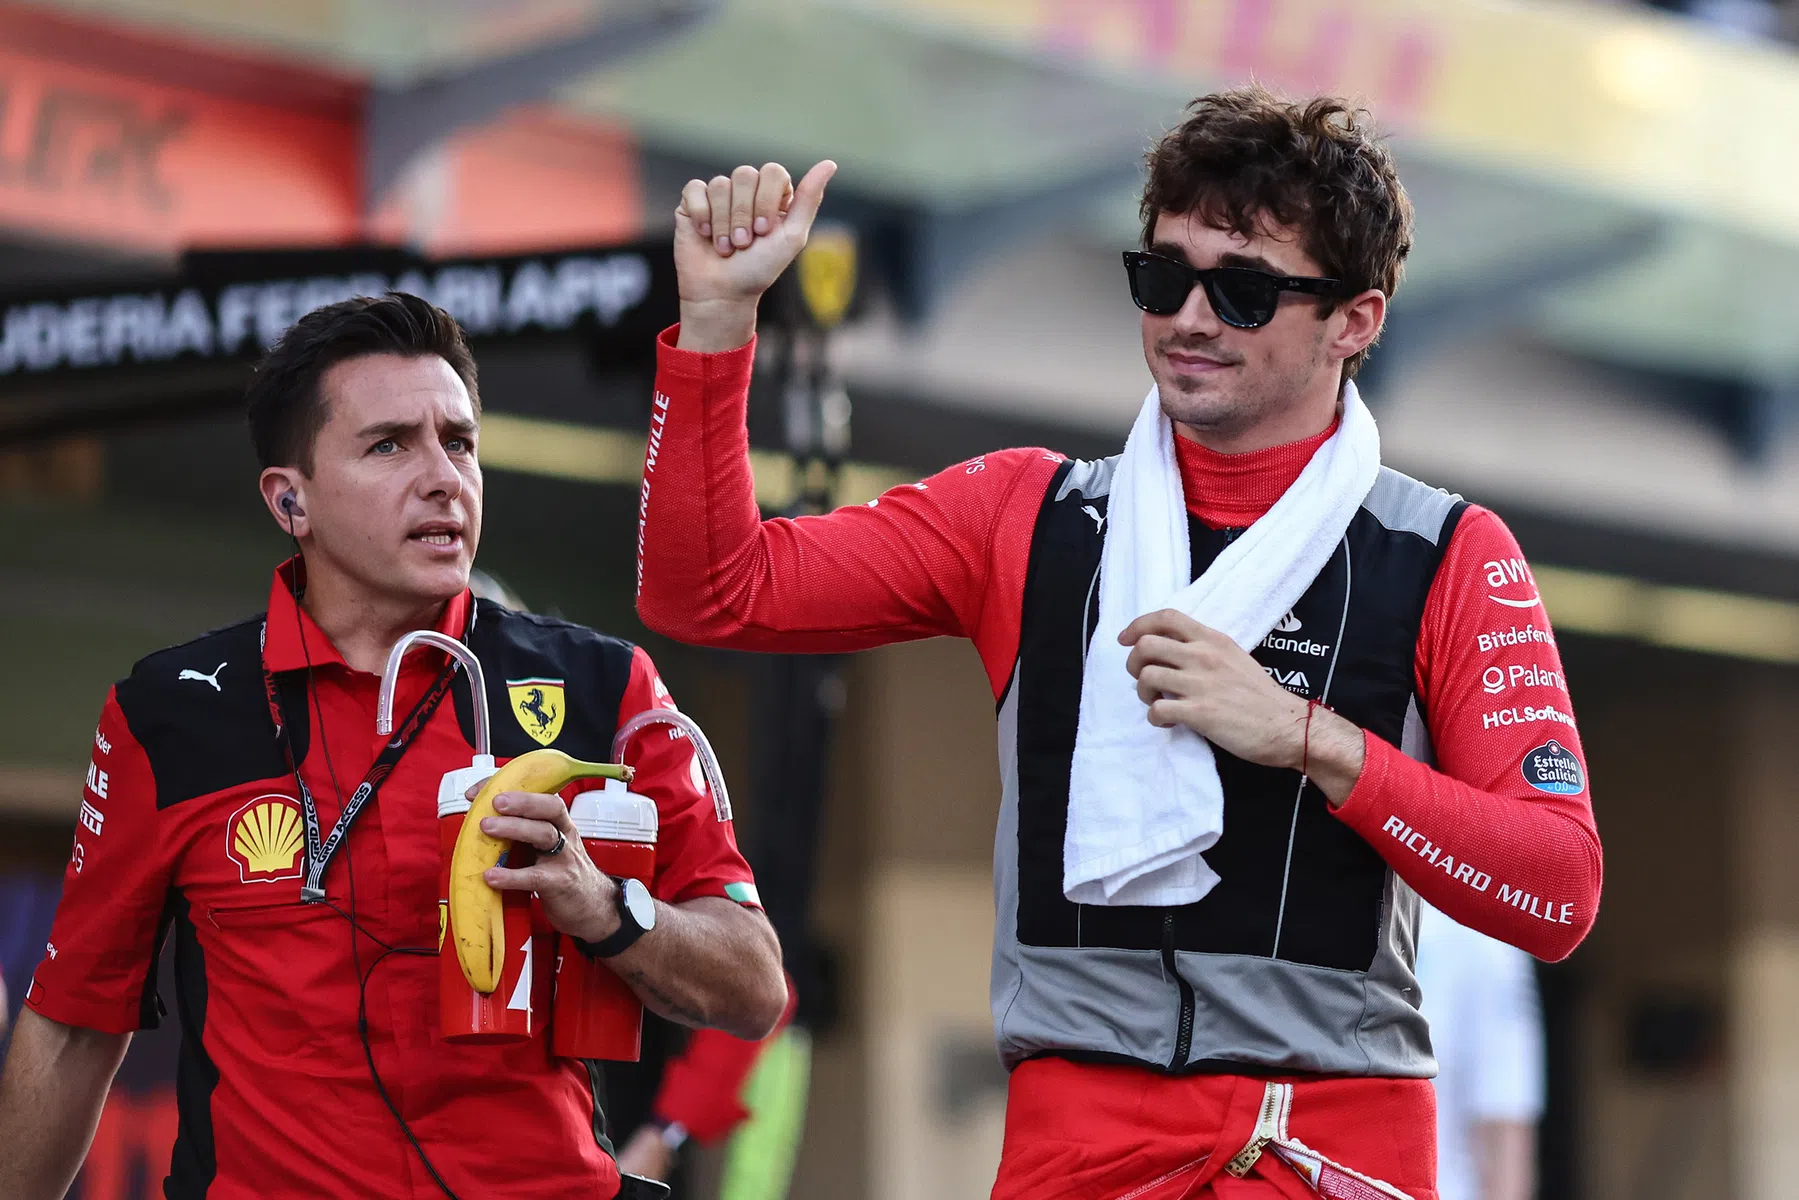 Ignacio Rueda, responsable de la stratégie de Ferrari, quitte la Formule 1